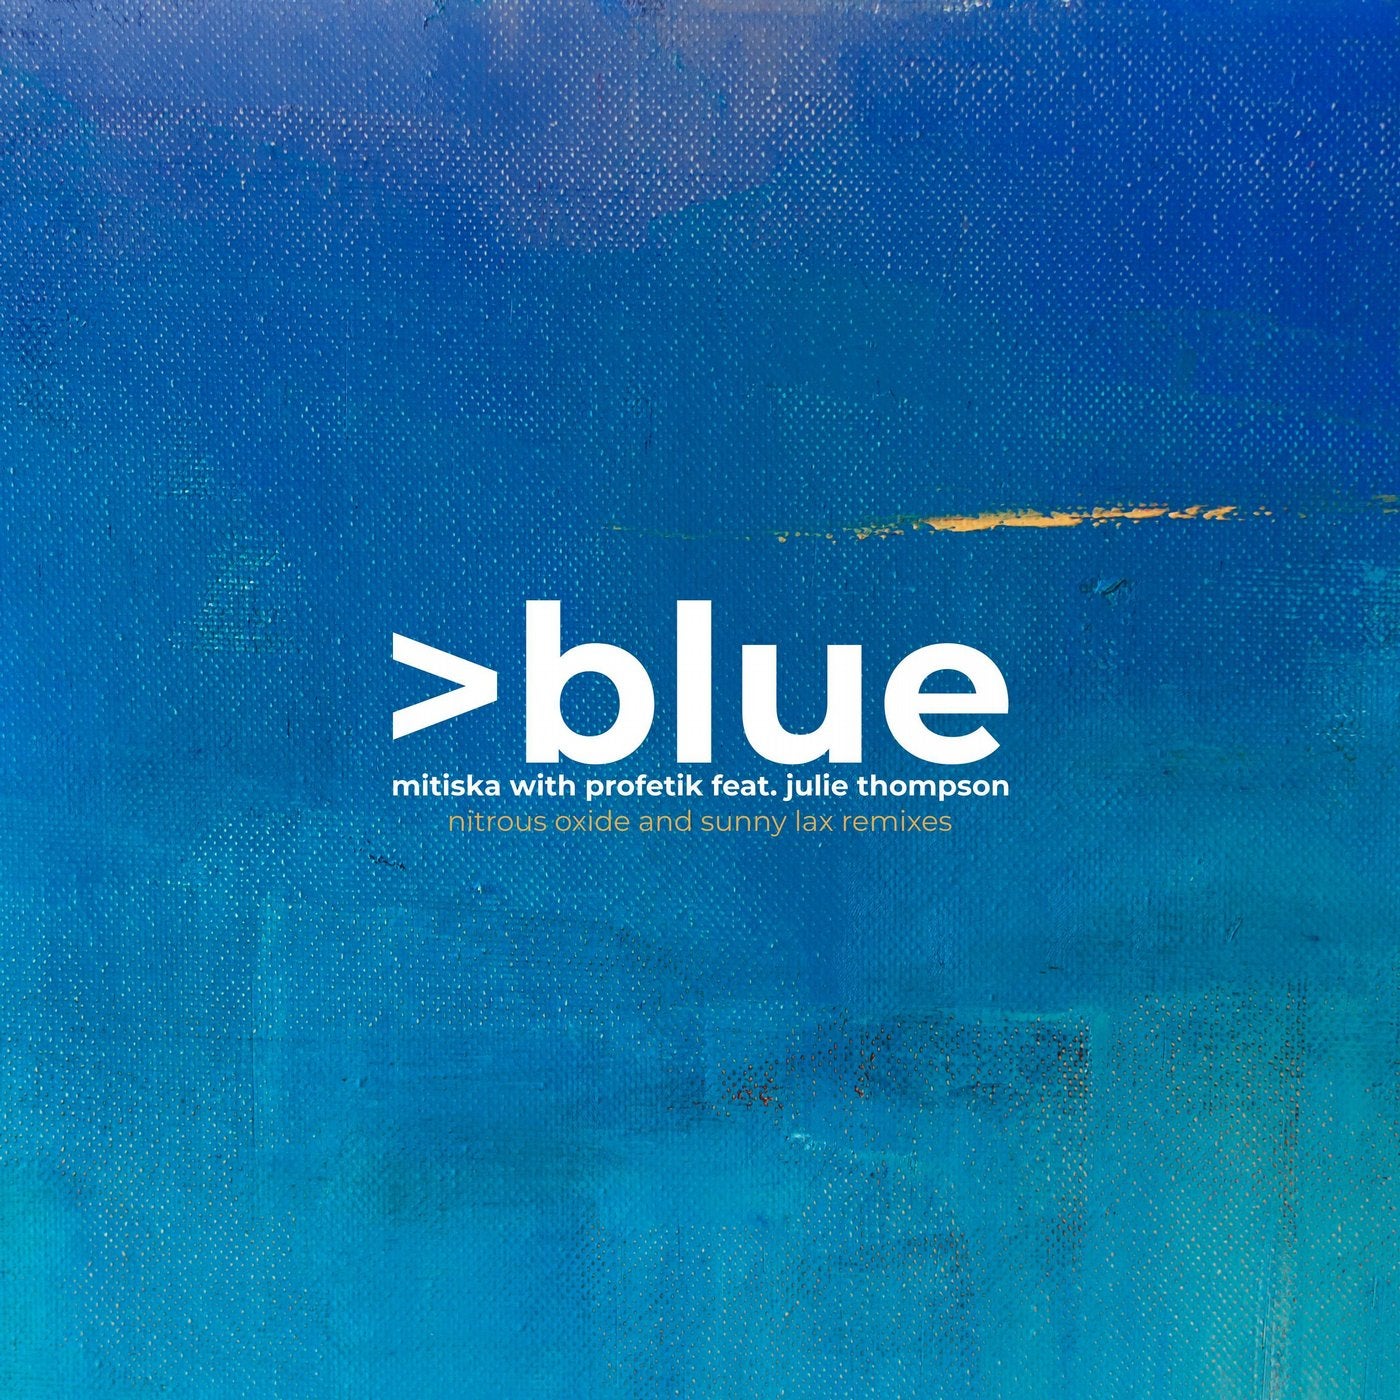 Blue - The Remixes